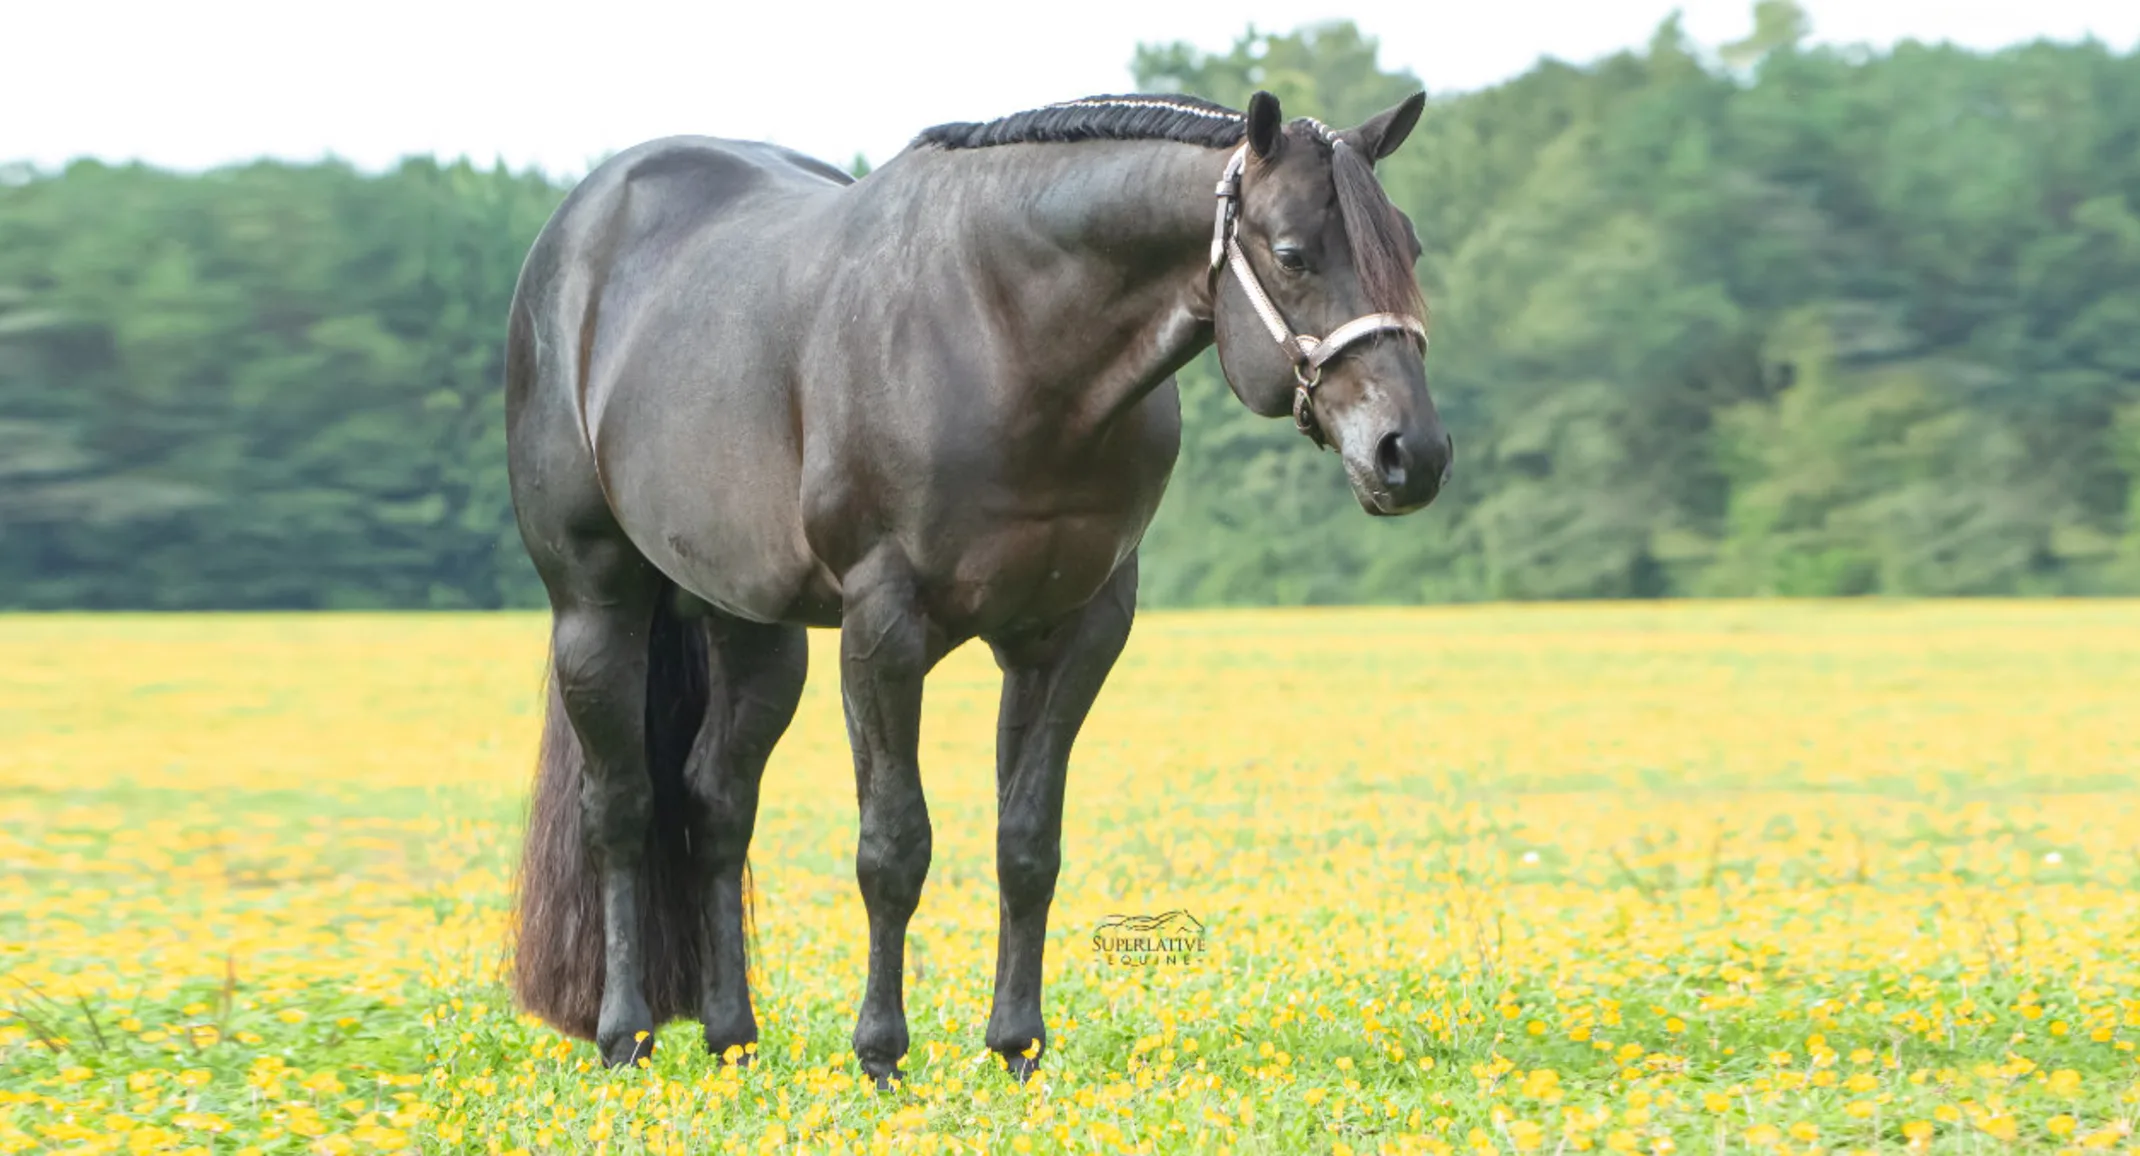 SST Festus, a dark grayish/brown horse